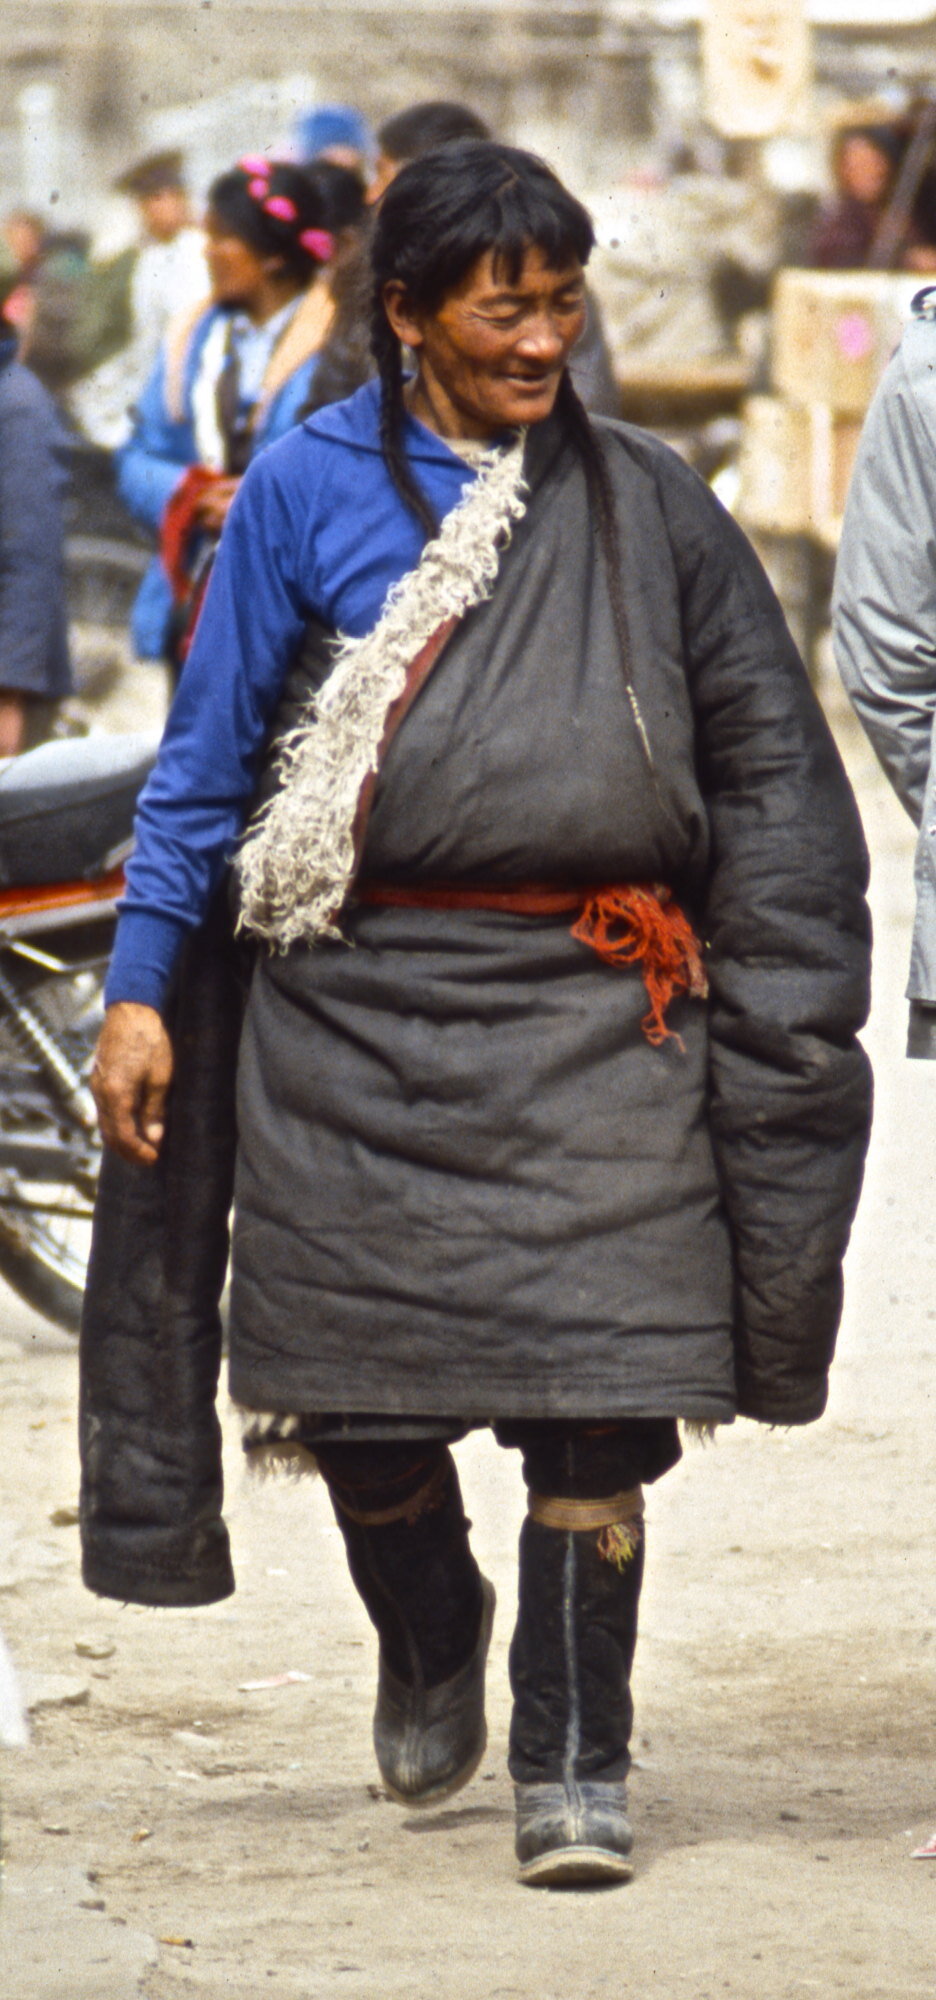 Traditional dress. Lhasa, Tibet.